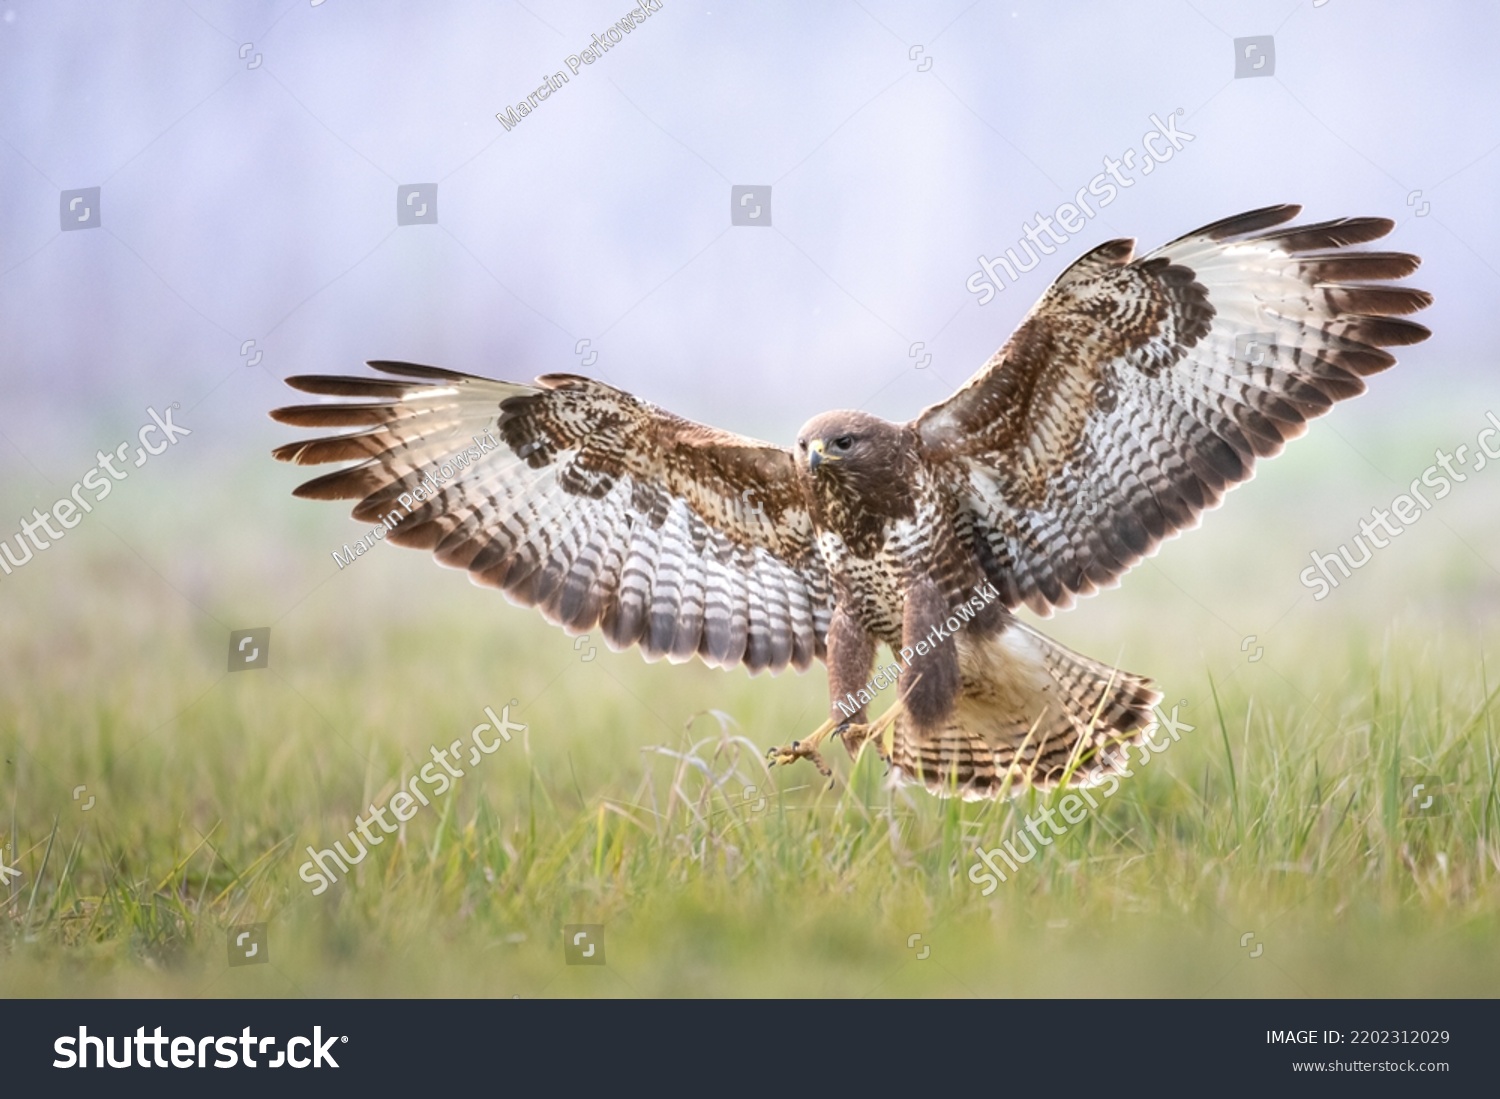 Common buzzard (Buteo buteo) in the fields in winter snow, buzzards in natural habitat, hawk bird on the ground, predatory bird close up #2202312029